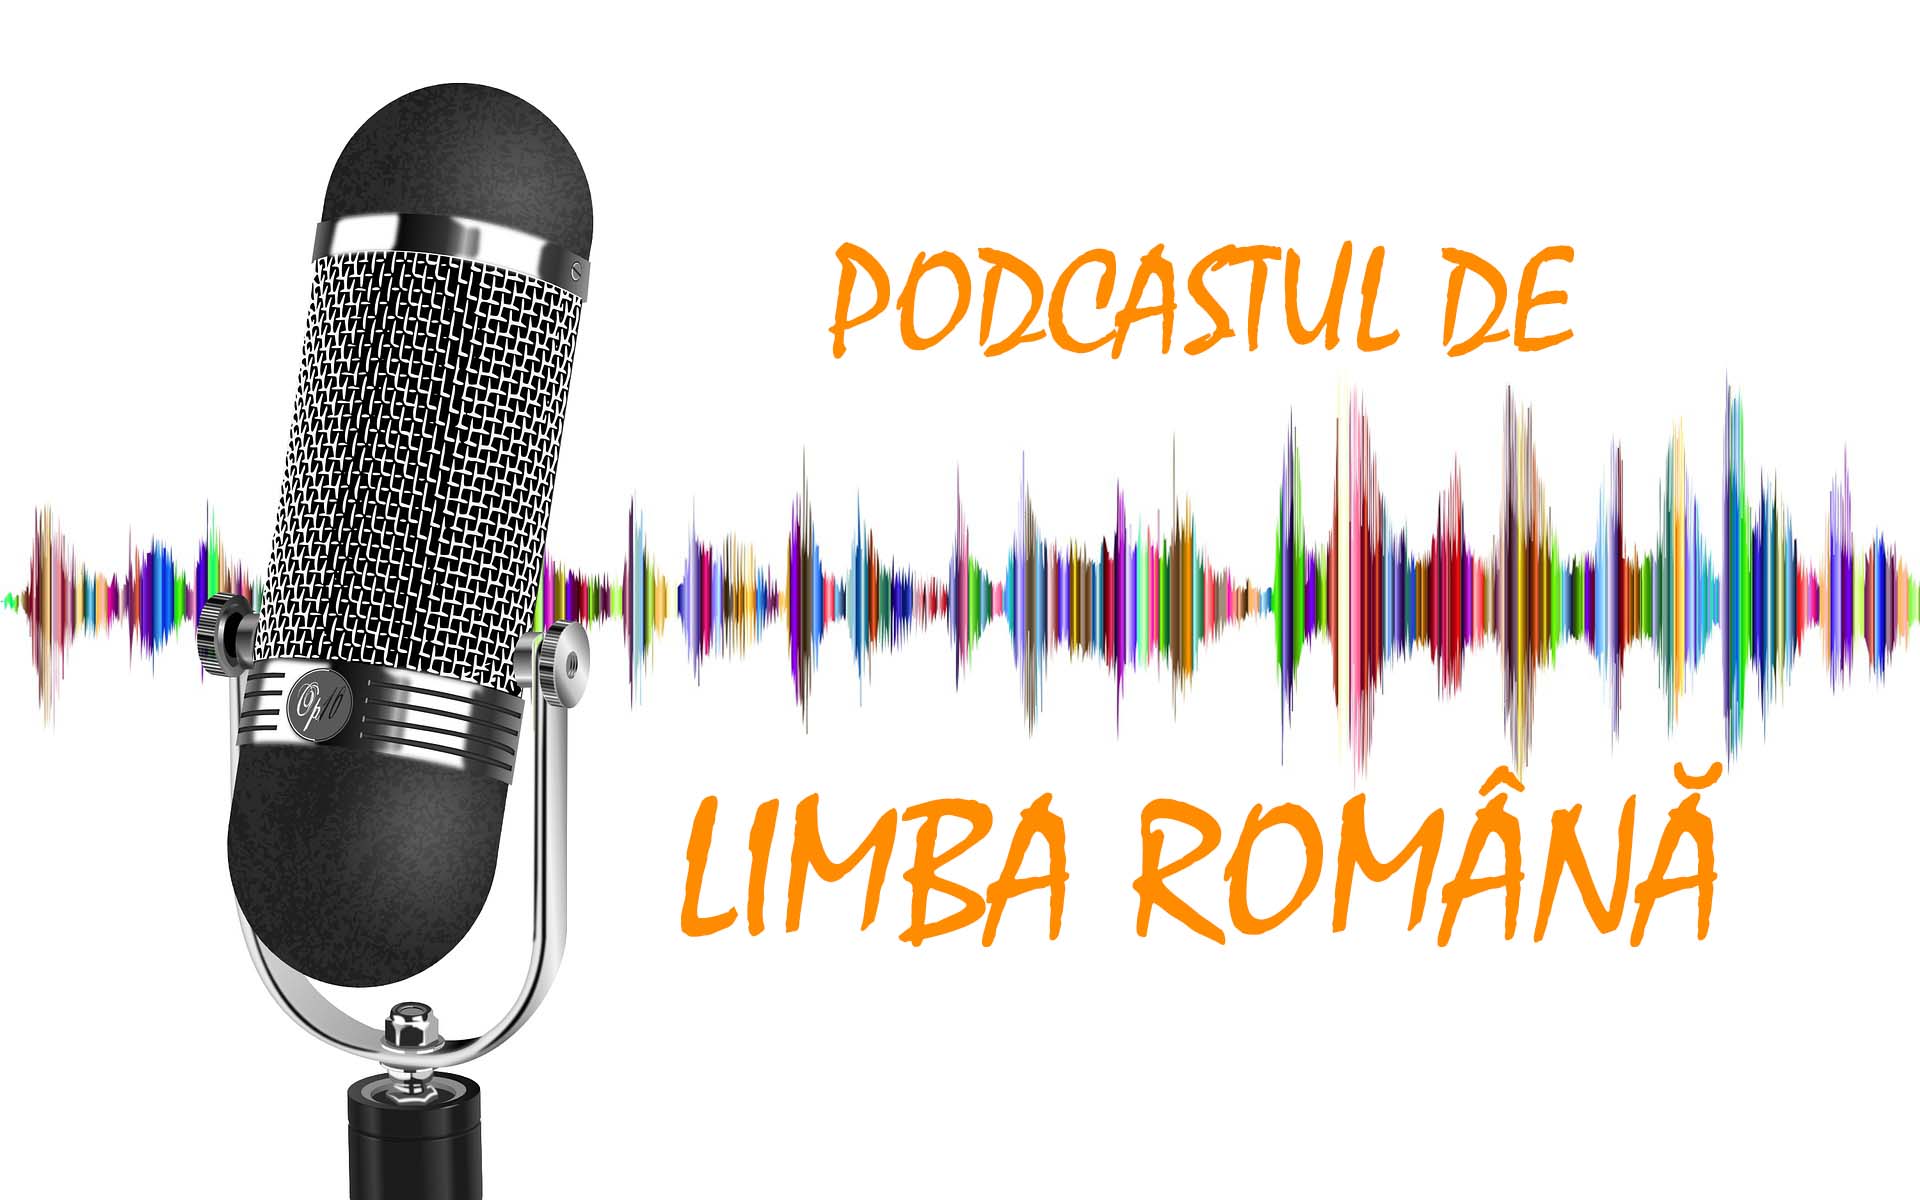 Romanian podcast